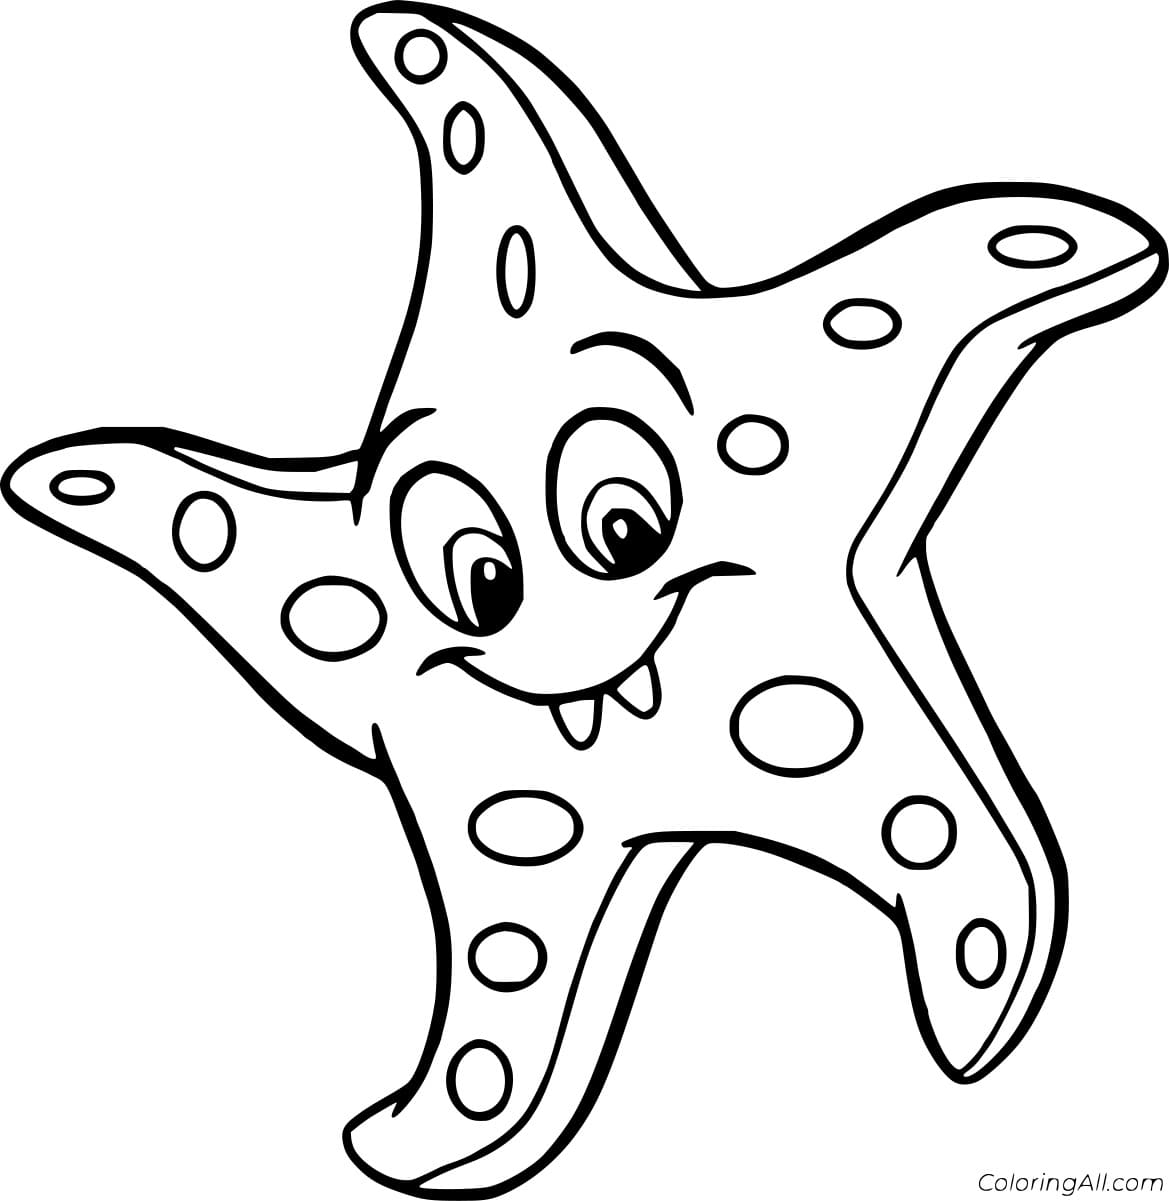 Cute Sea Star Image